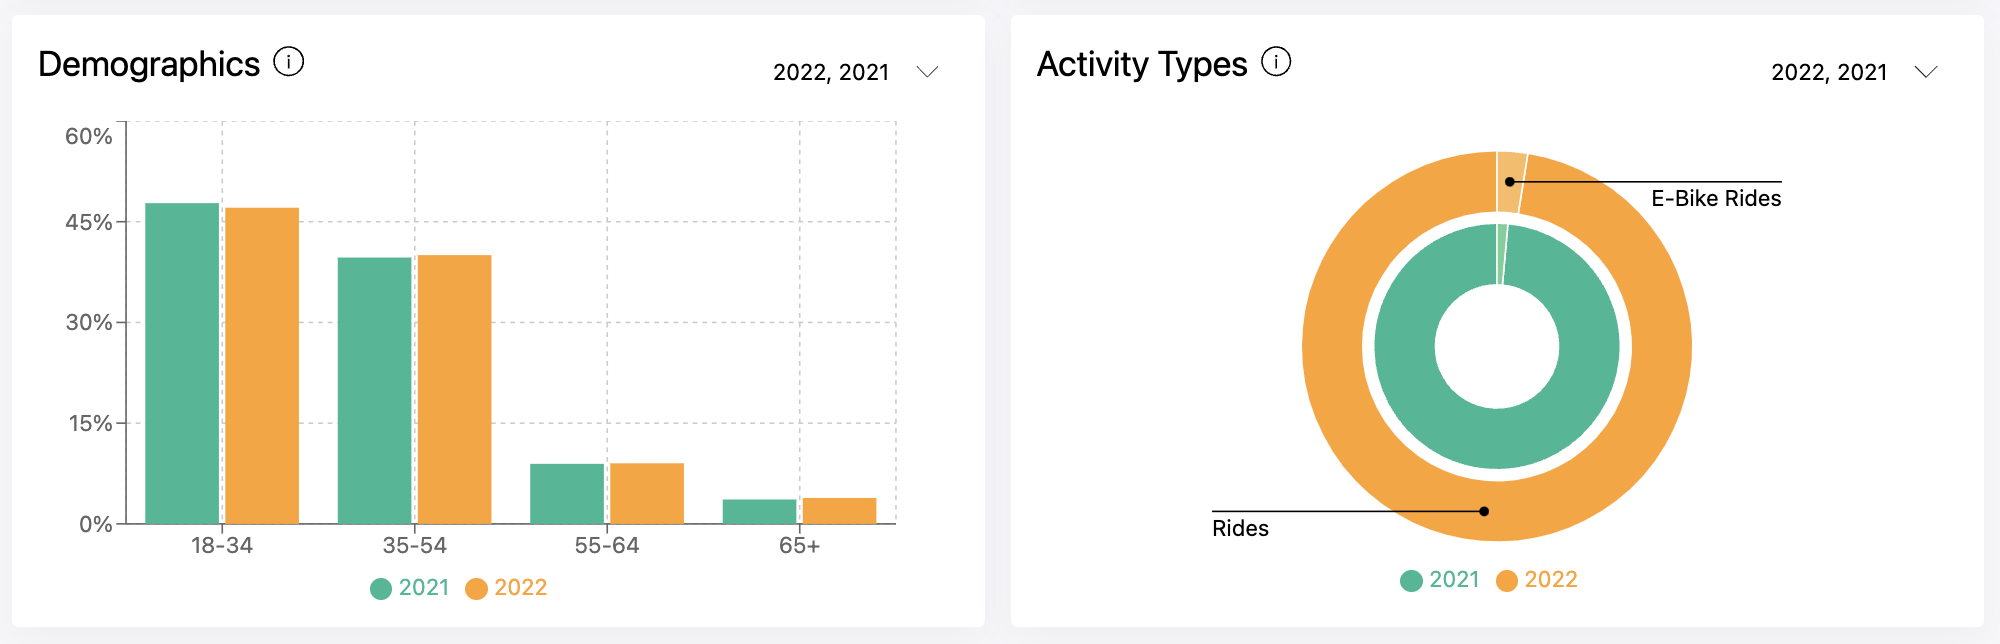 demographics_activity_types_20220914.png